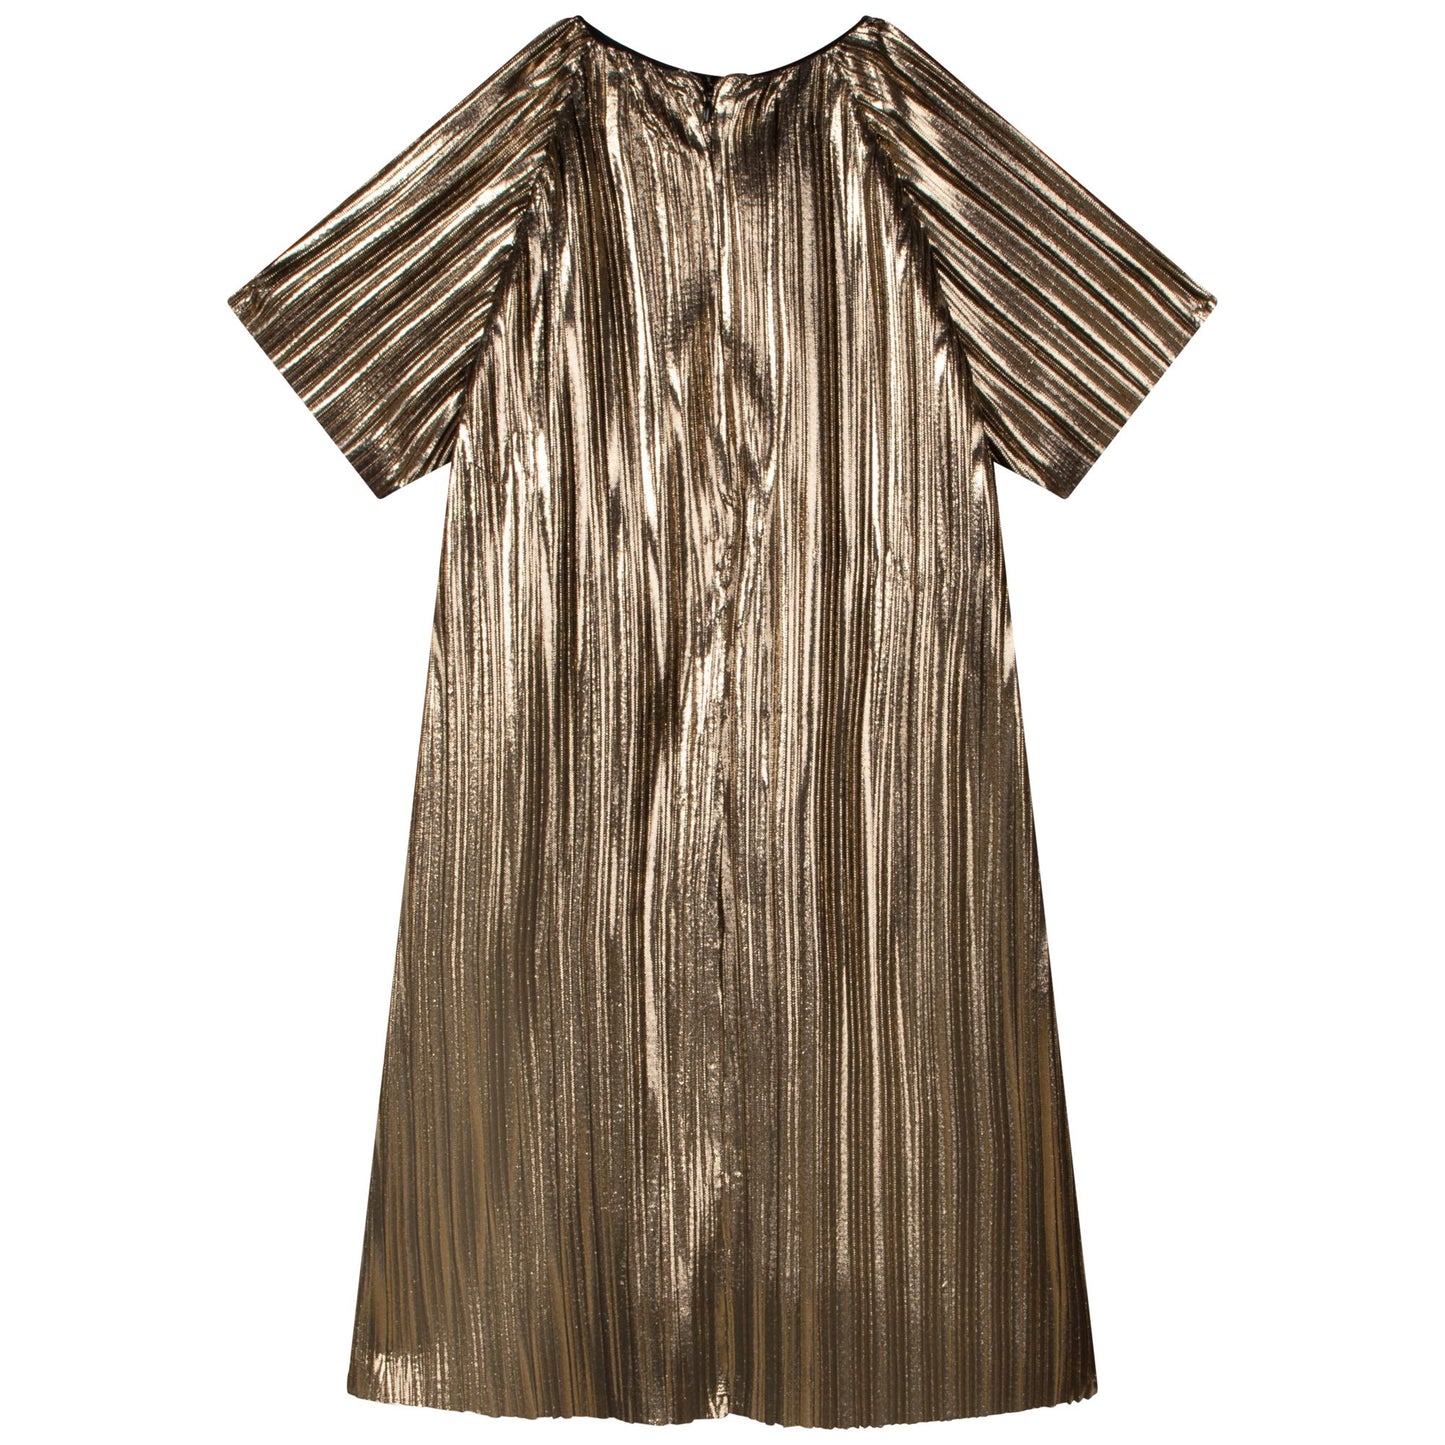 Michael Kors Metallic Pleated S/S Dress _Gold R12130-574